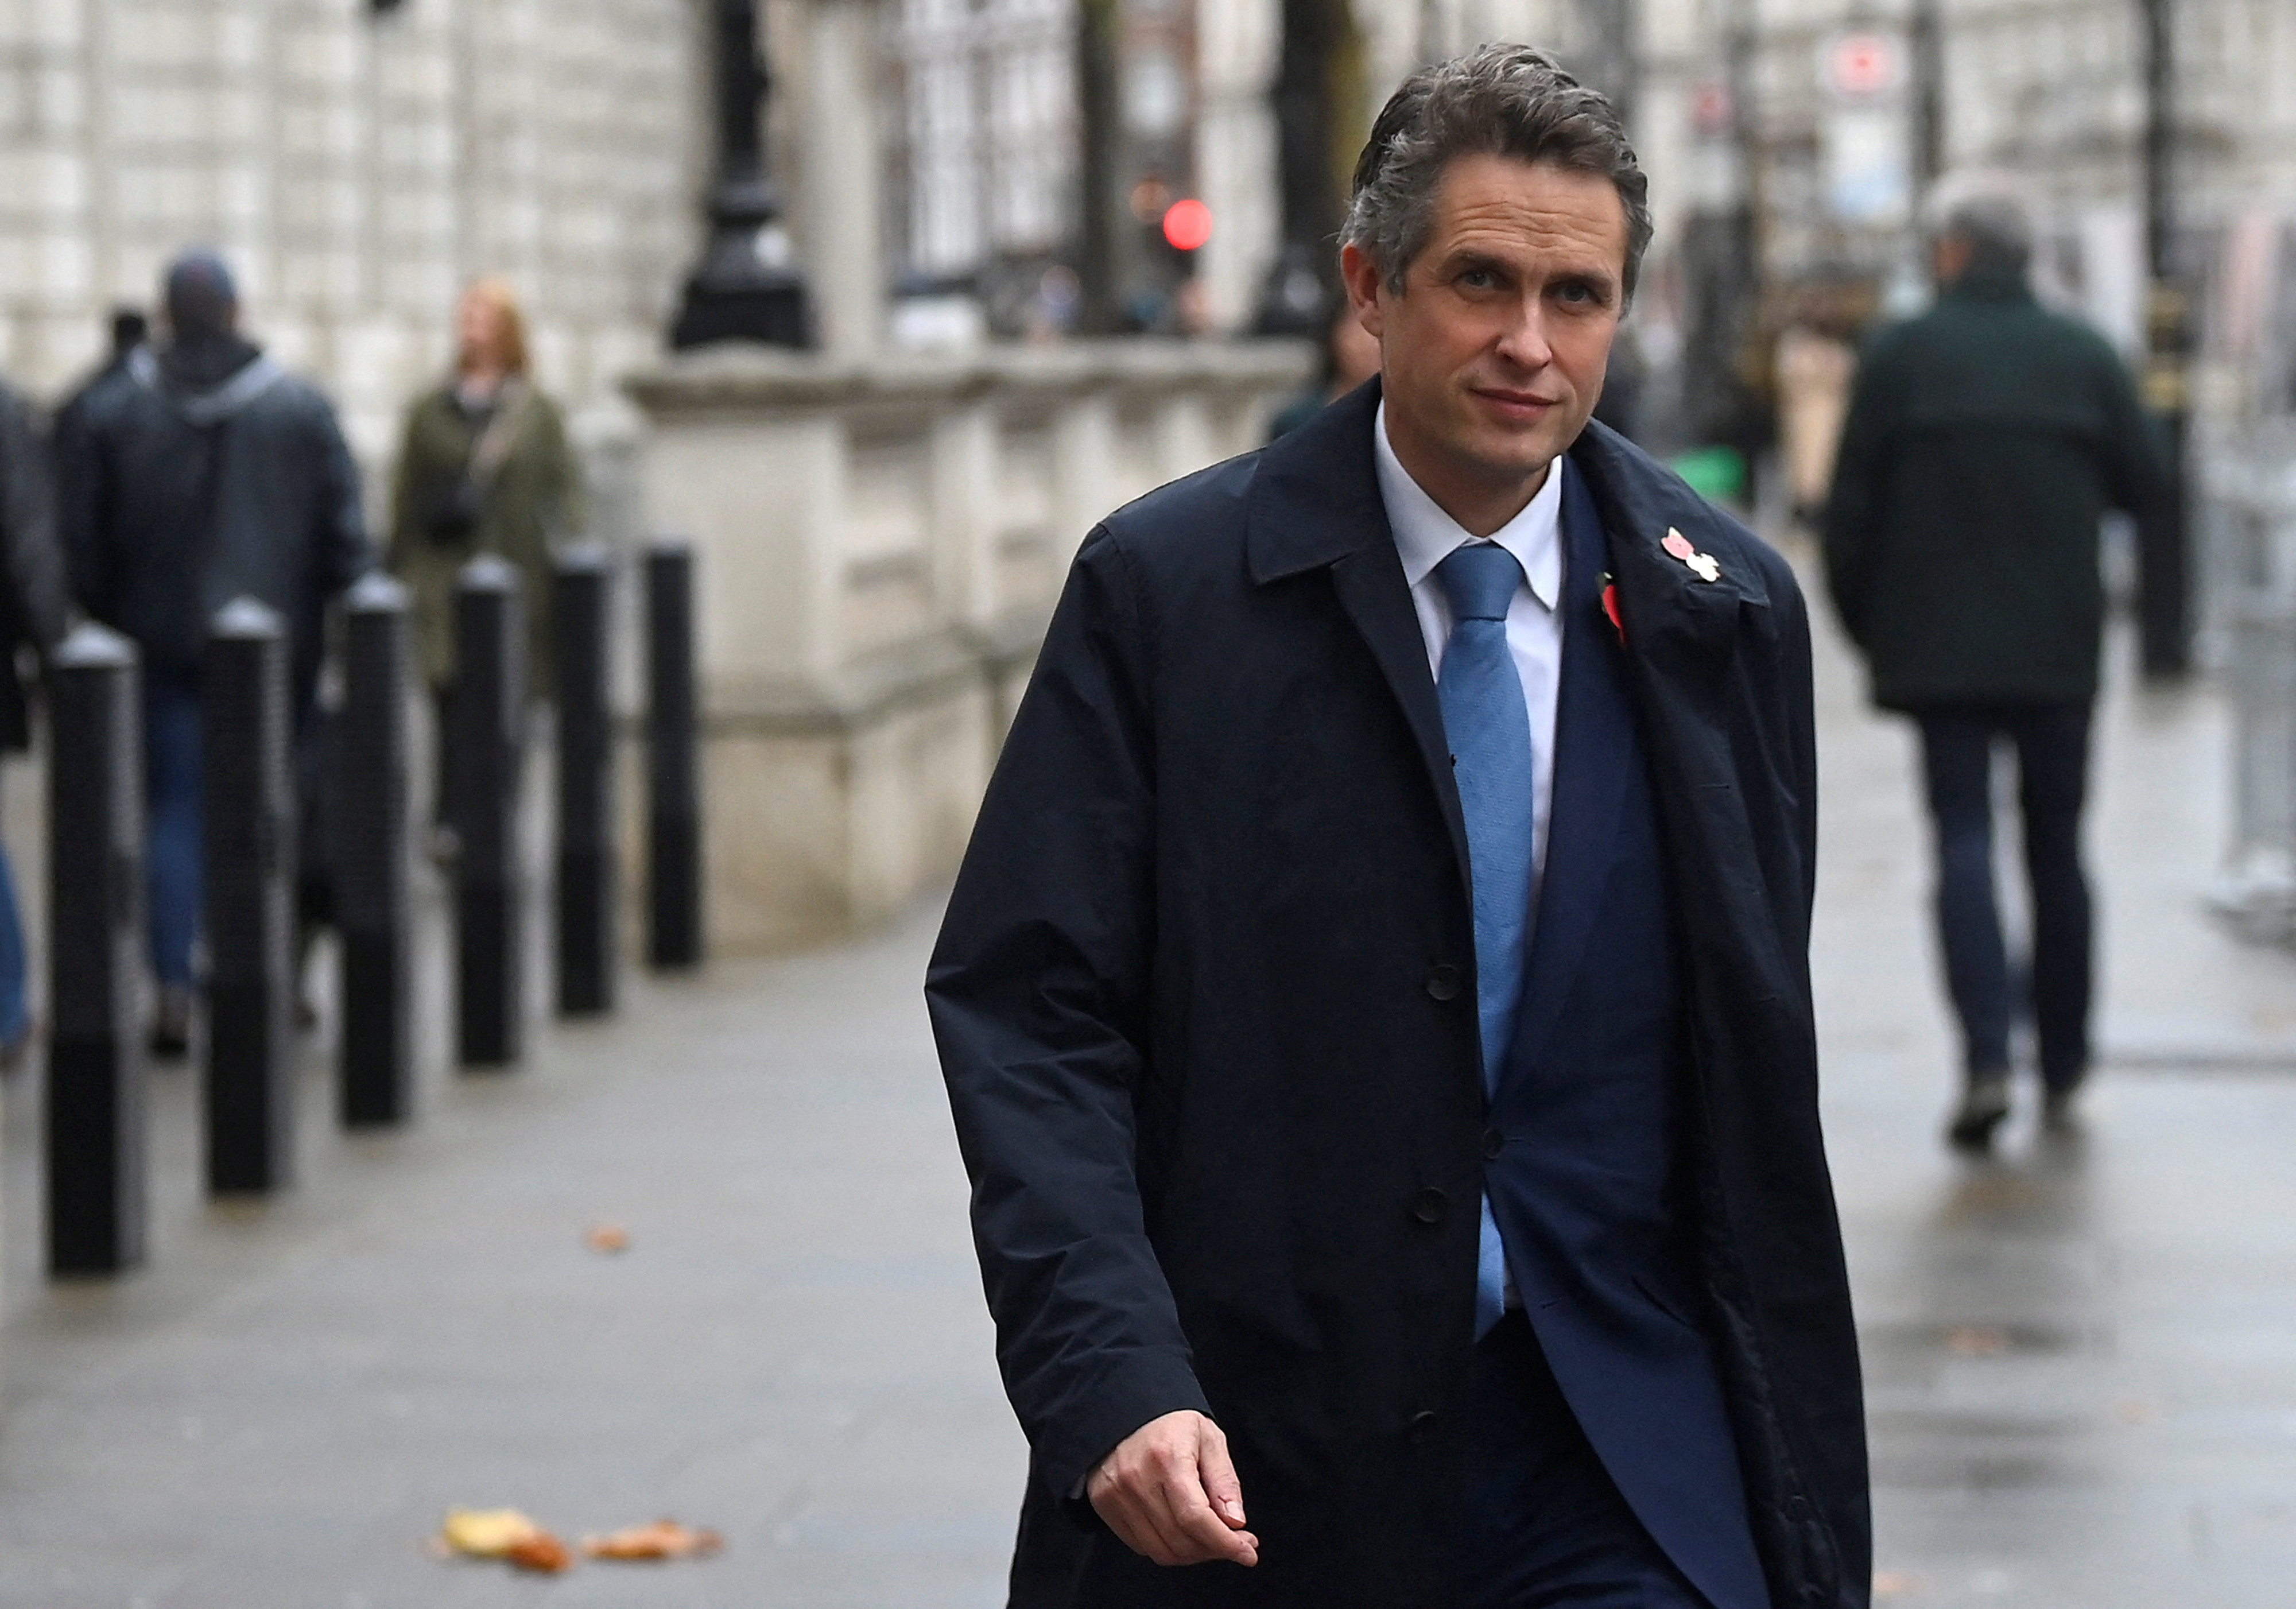 Britain's Minister of State without Portfolio Williamson strolls through London